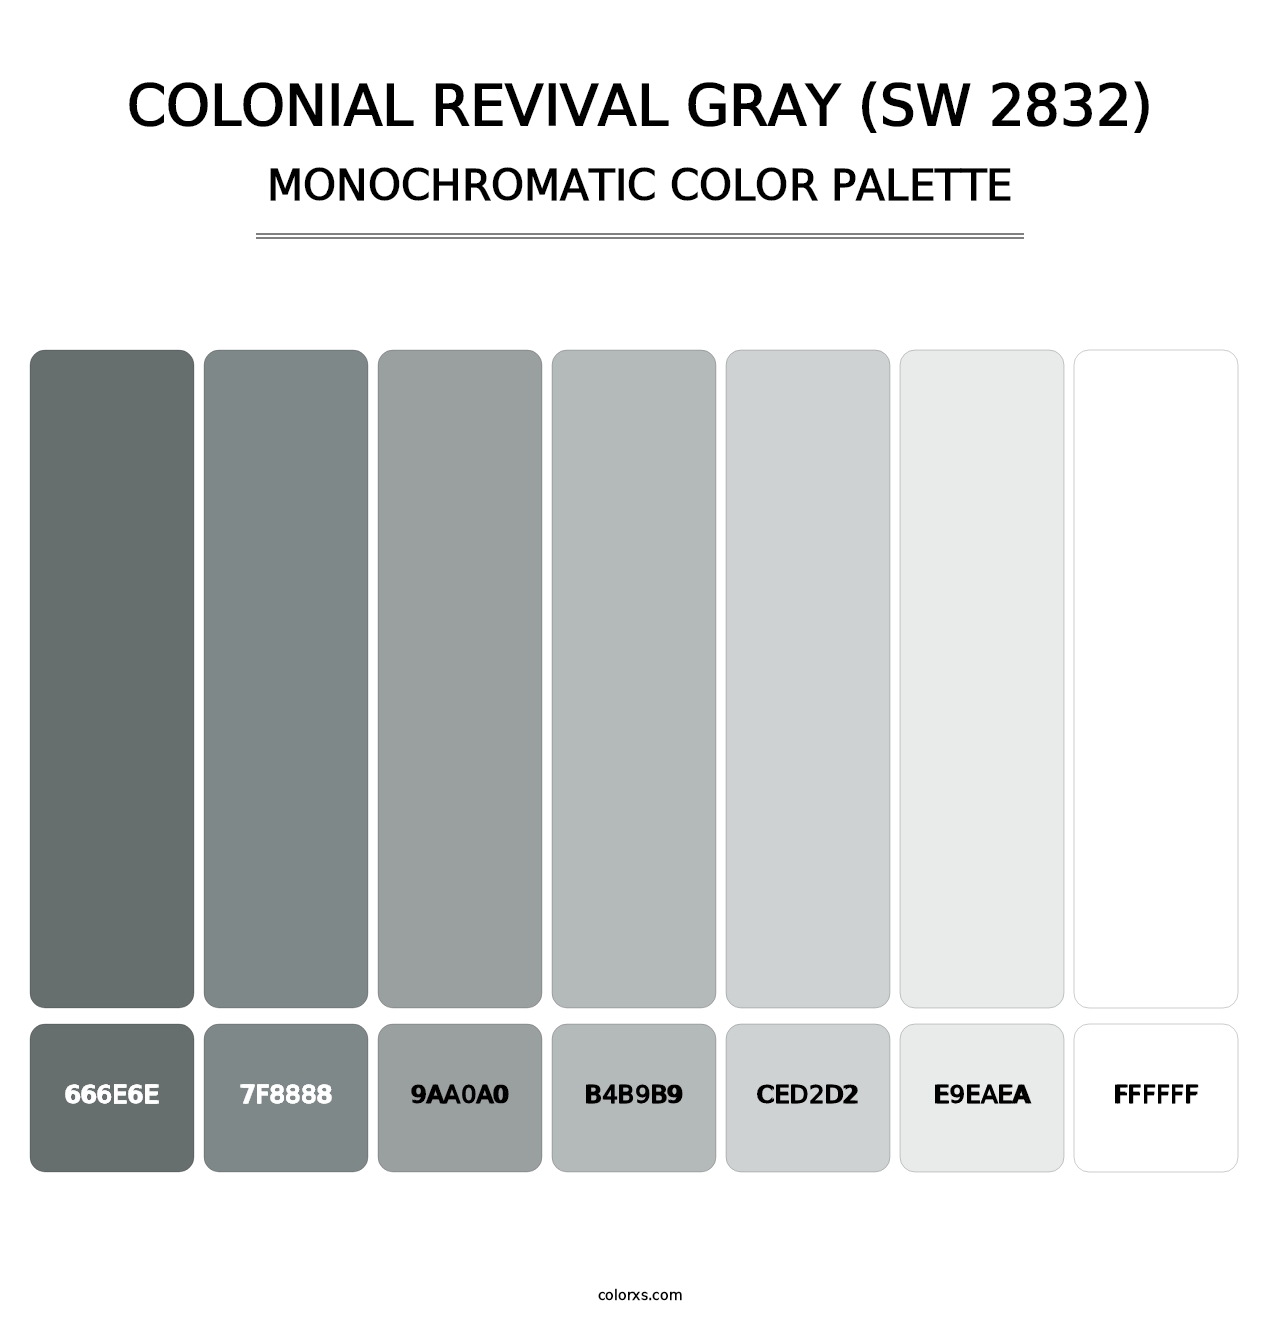 Colonial Revival Gray (SW 2832) - Monochromatic Color Palette